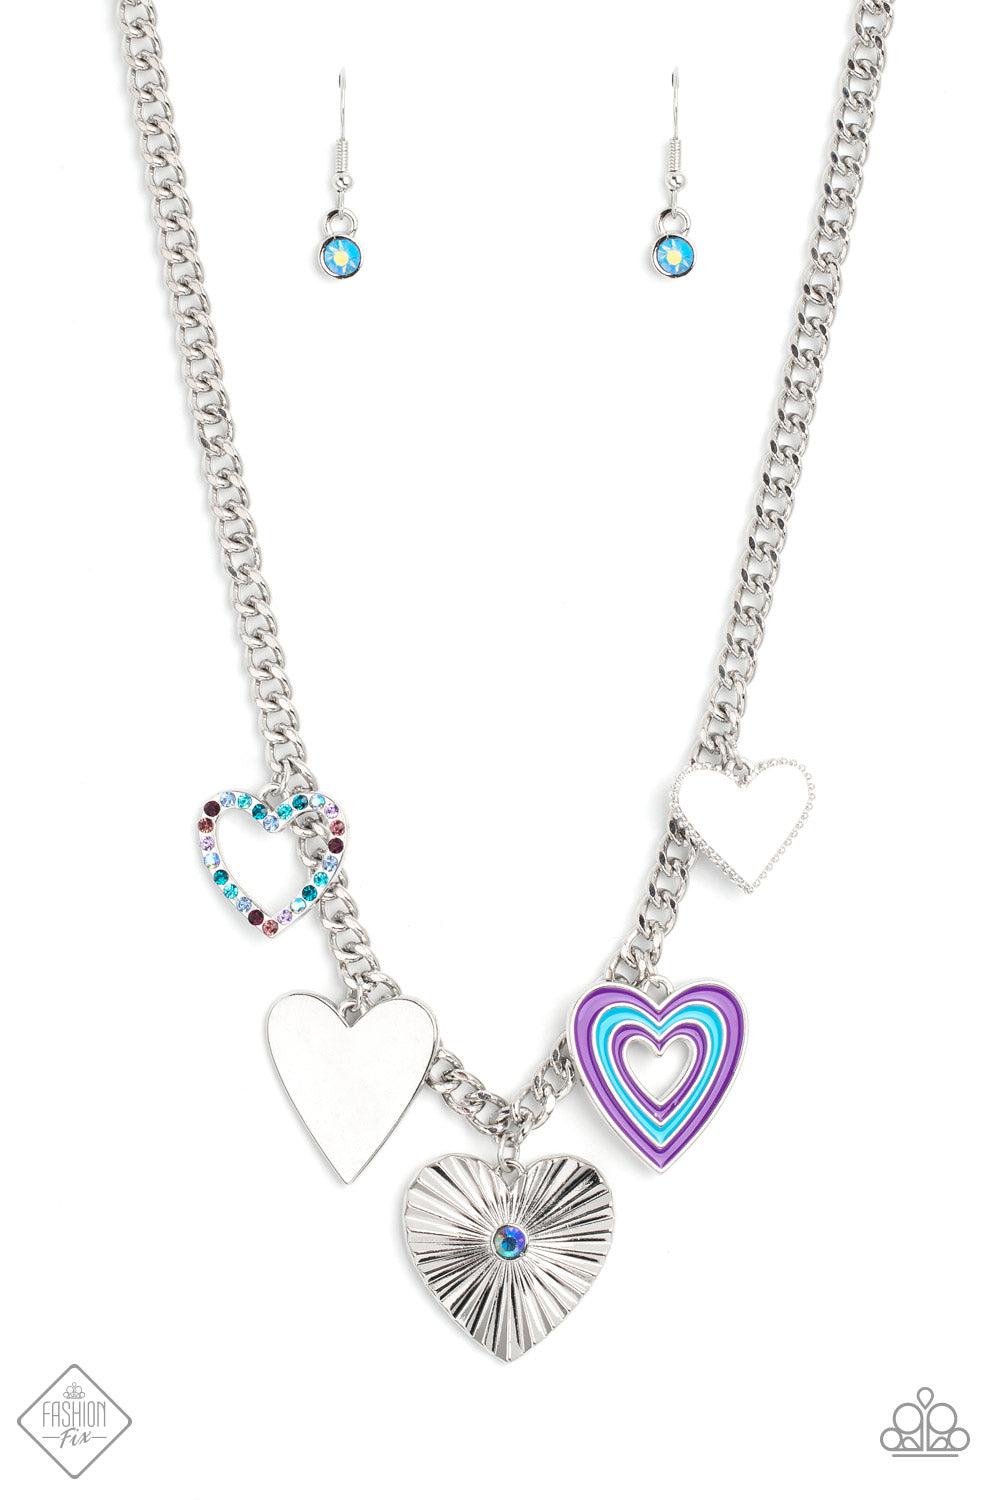 Retro Rhapsody Multi Heart Necklace - Paparazzi Accessories- lightbox - CarasShop.com - $5 Jewelry by Cara Jewels